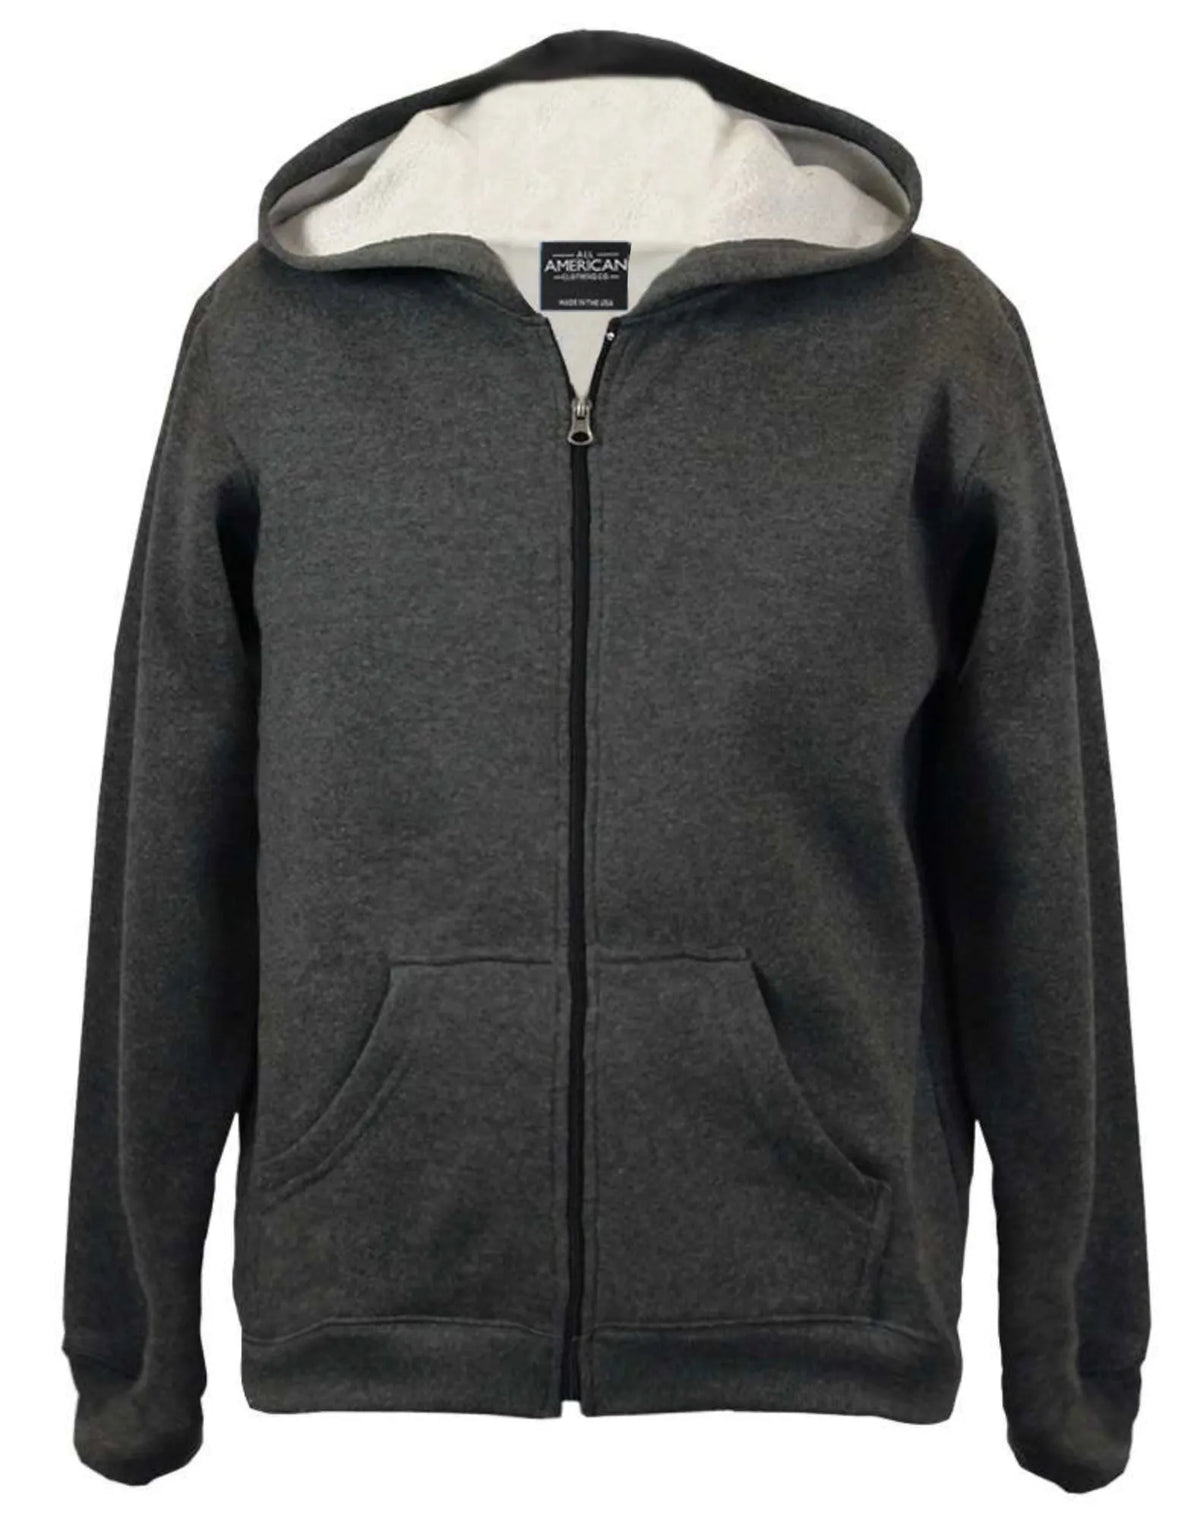 Full Zip Hooded Sweatshirt | All American Clothing Co.